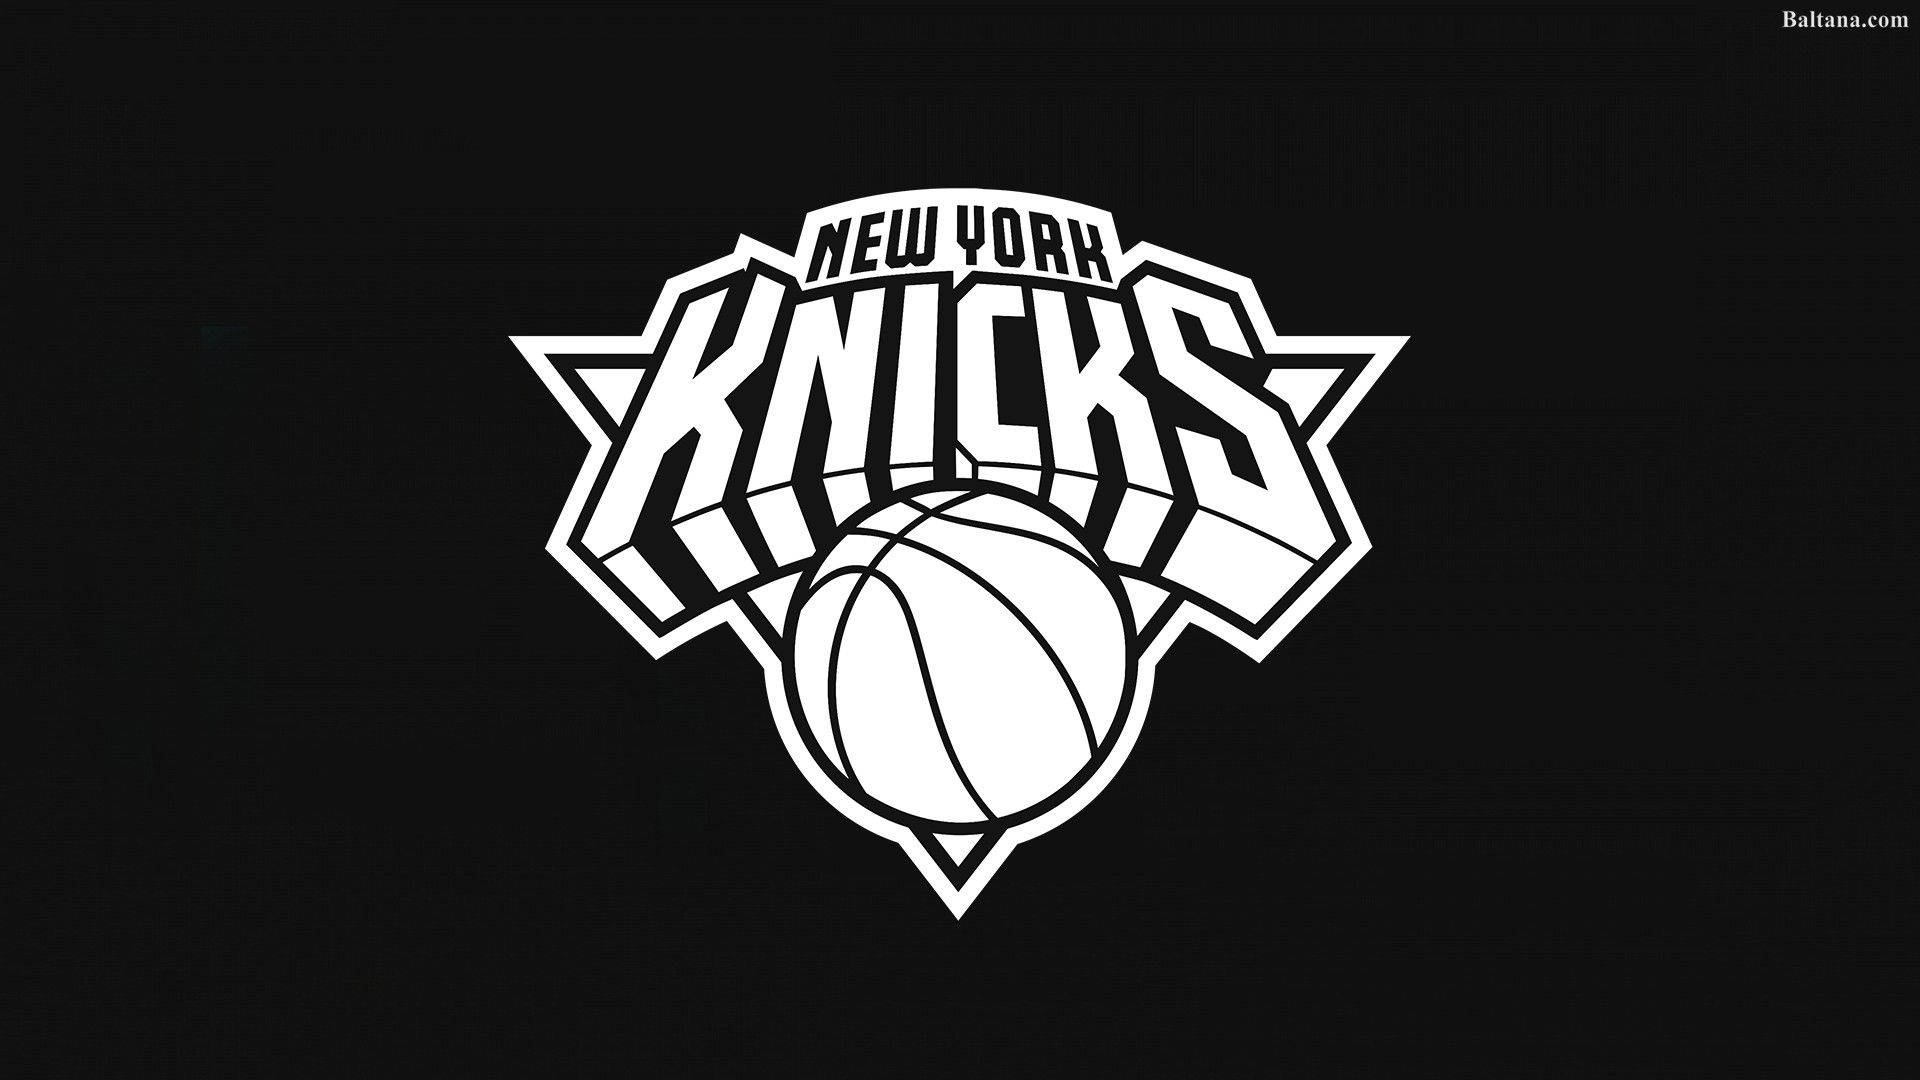 New York Knicks Black And White Background